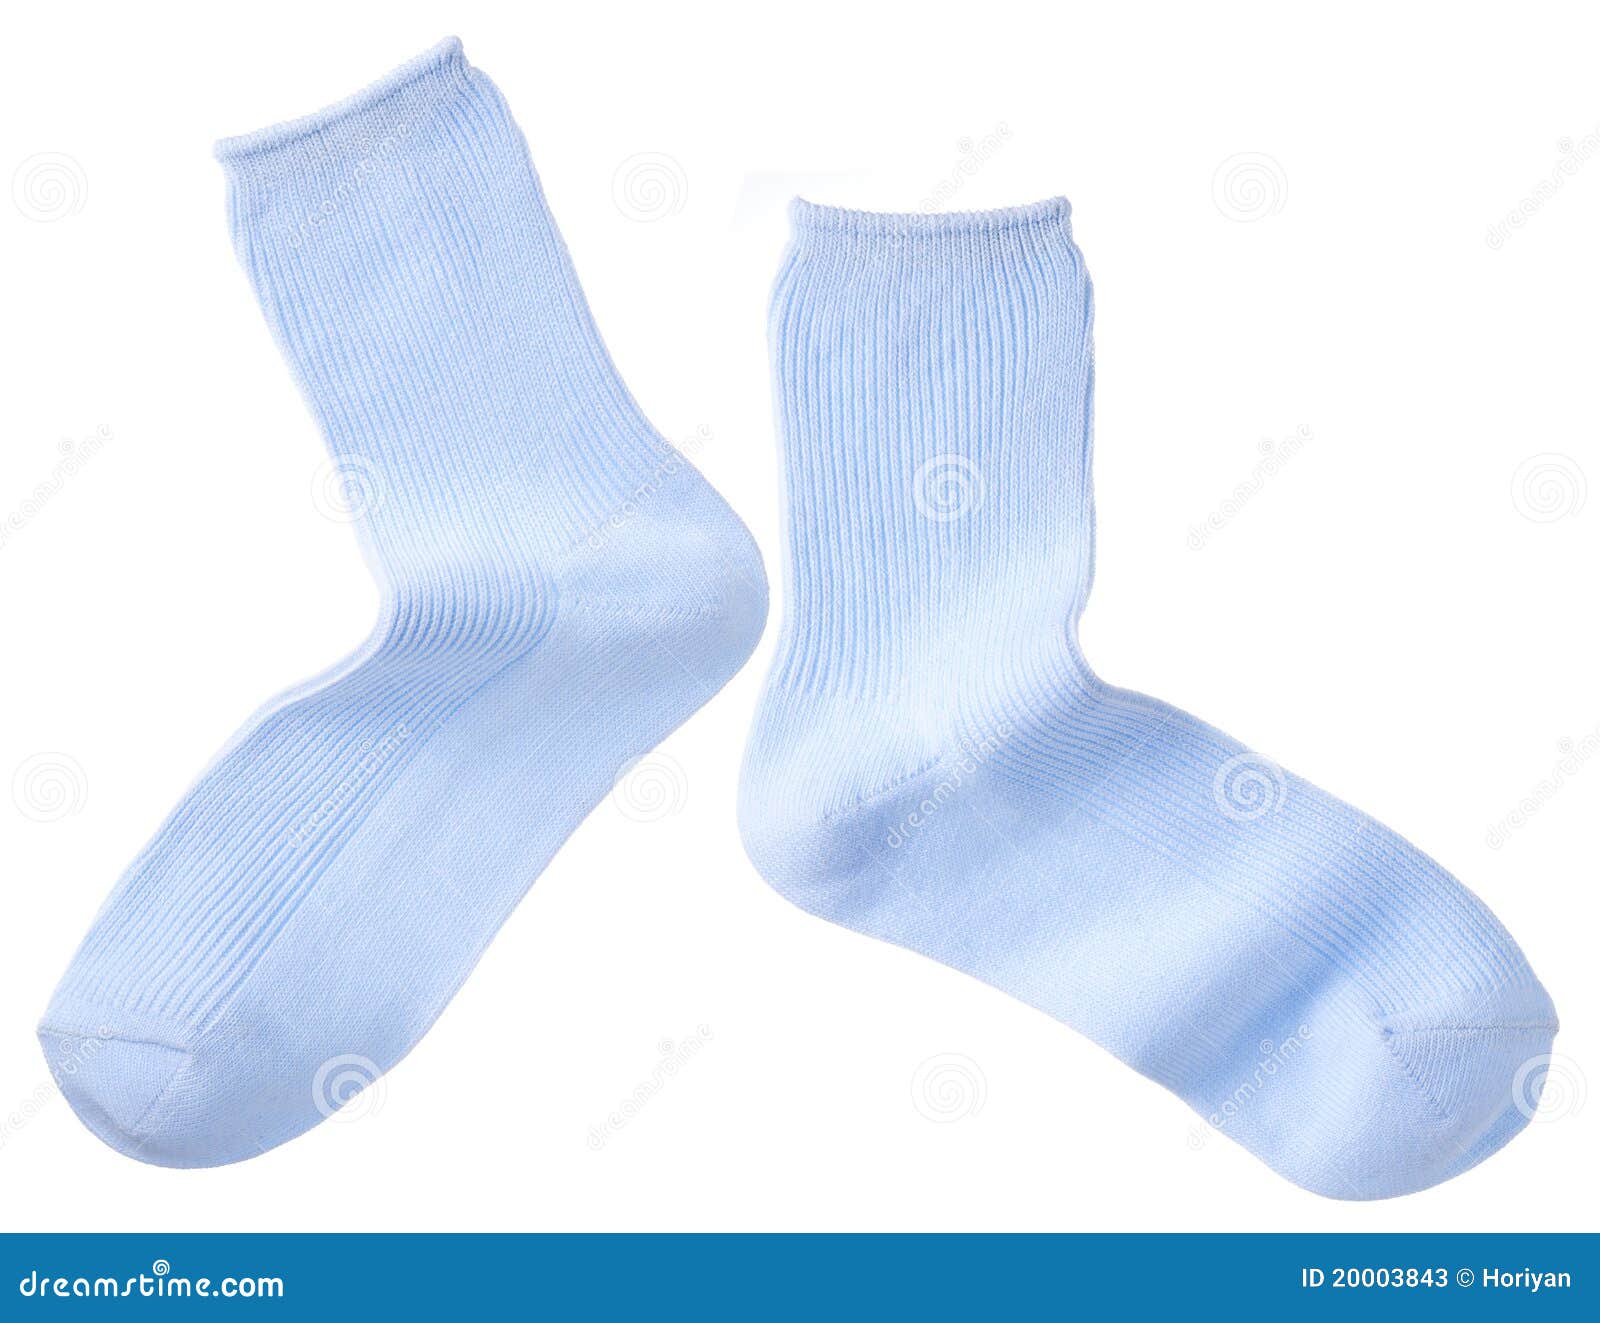 Socks stock image. Image of socks, object, background - 20003843